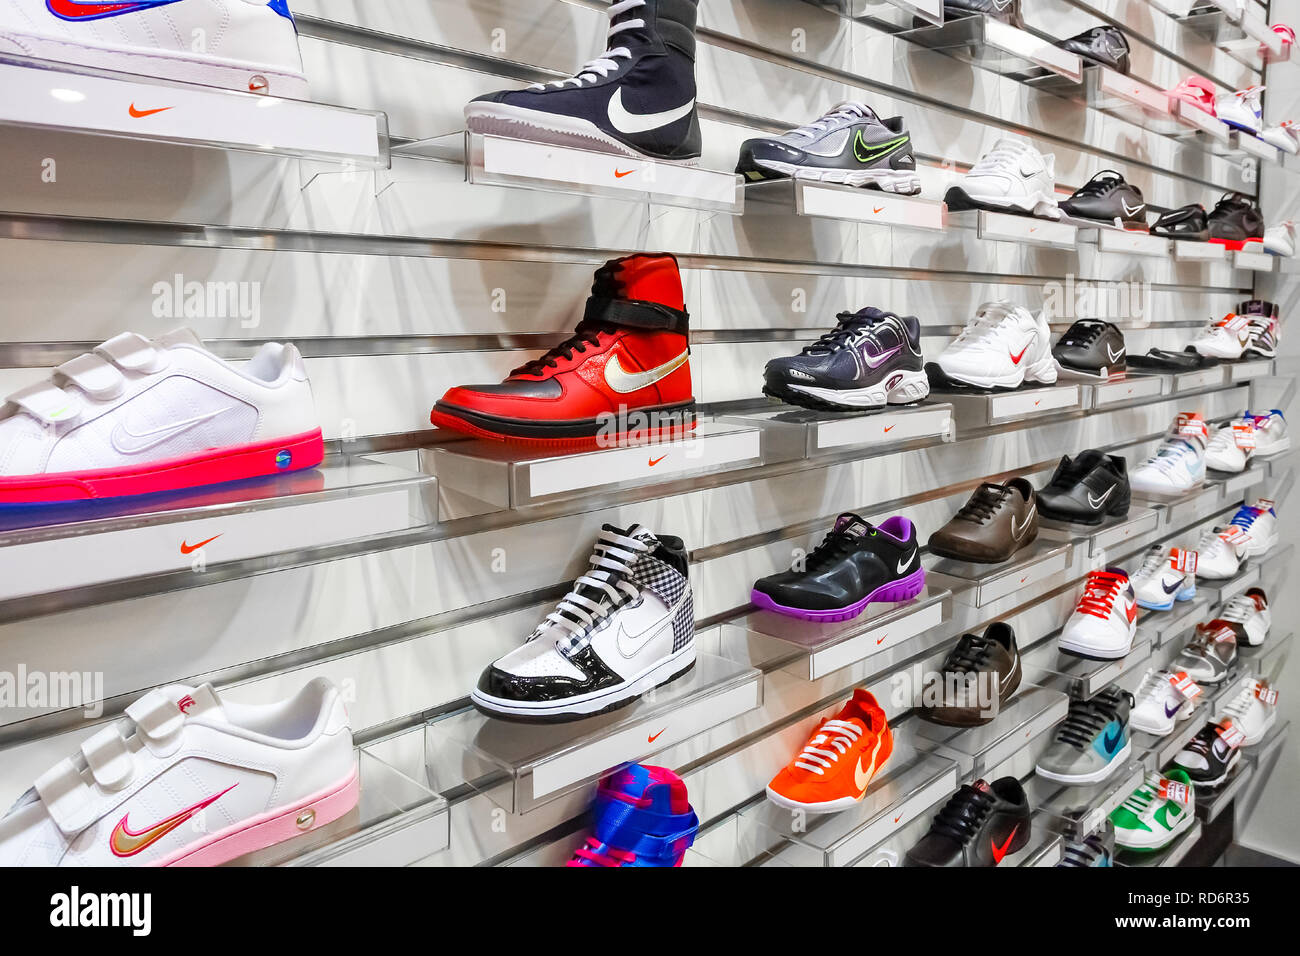 Nike Store Interior Stock Photos & Nike Store Interior Stock Images - Alamy